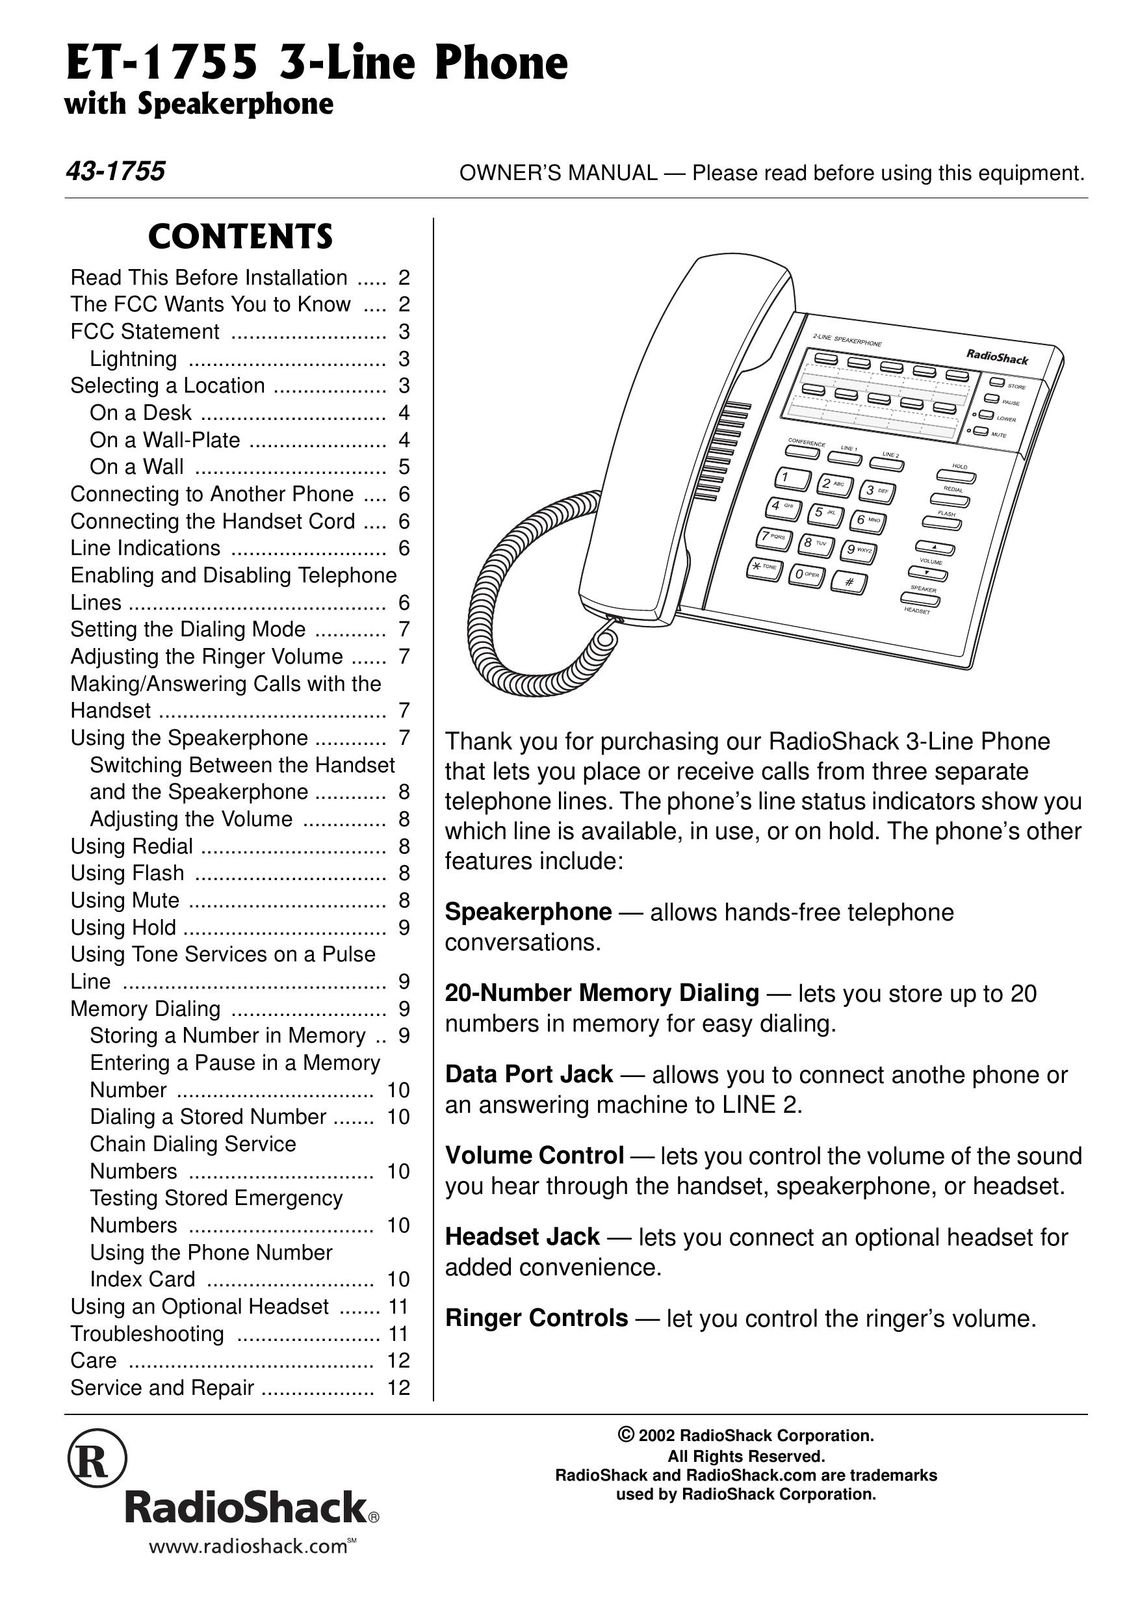 Radio Shack ET-1755 Conference Phone User Manual